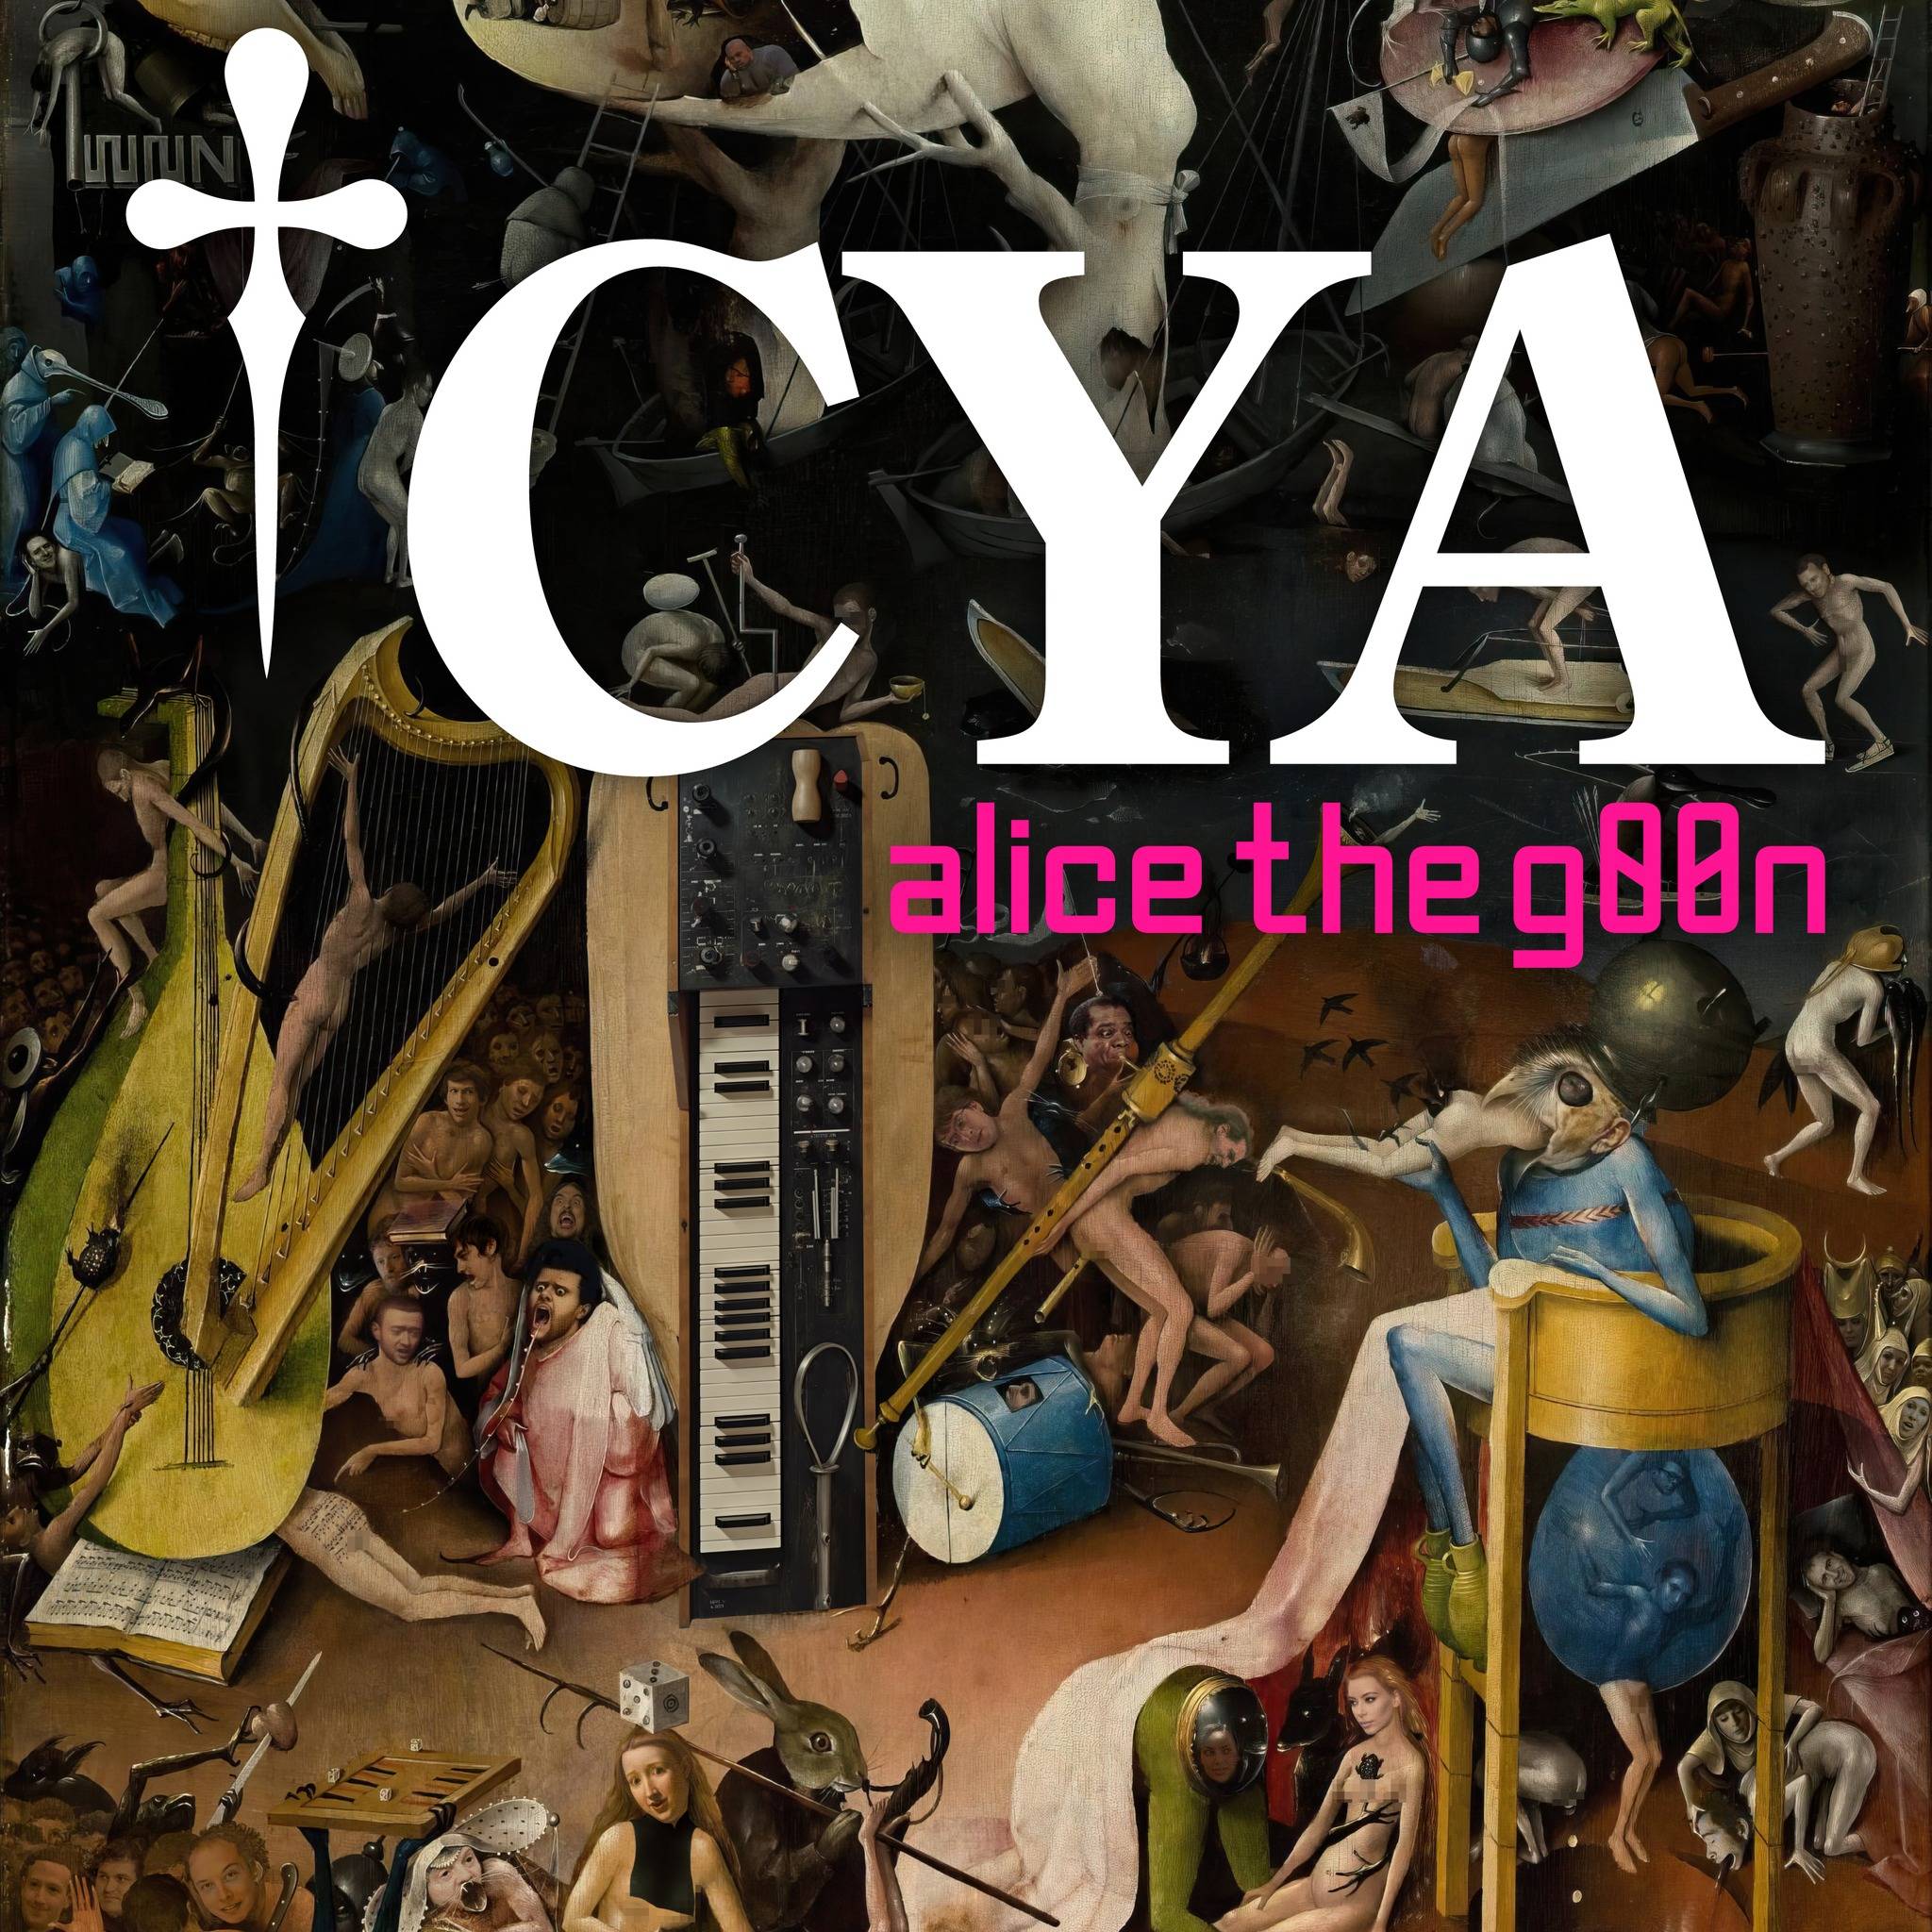 alice the g00n “CYA” single artwork